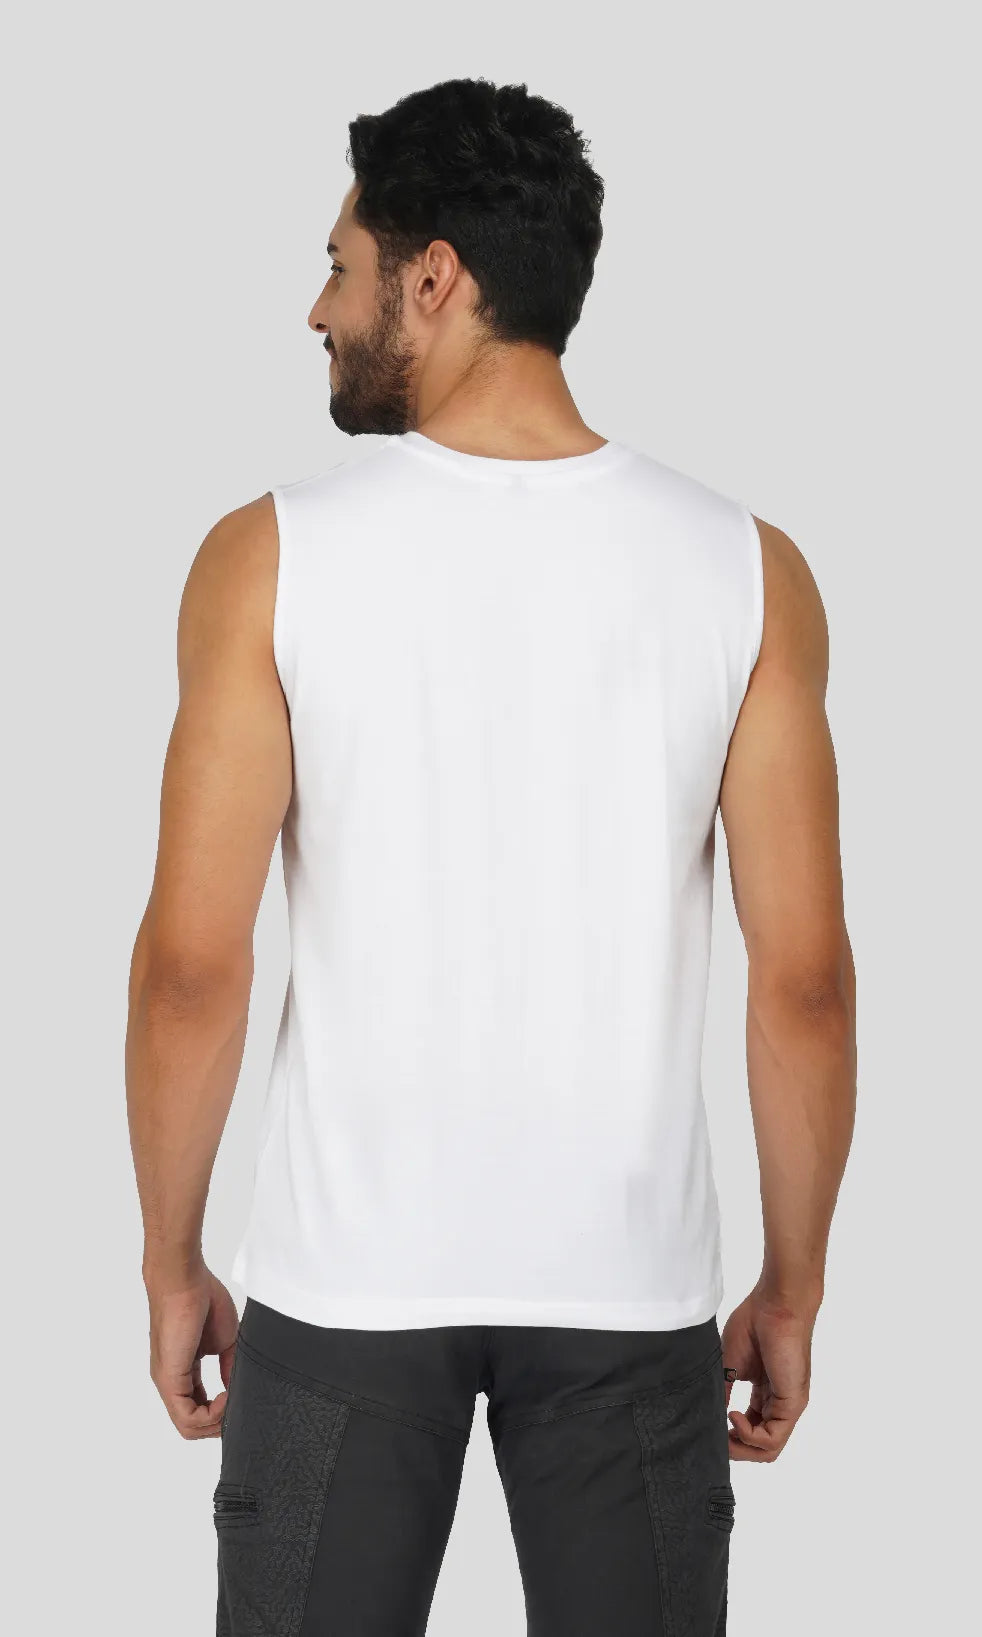 Mebadass Cotton Men's Sleeveless Regular Size Vests - White